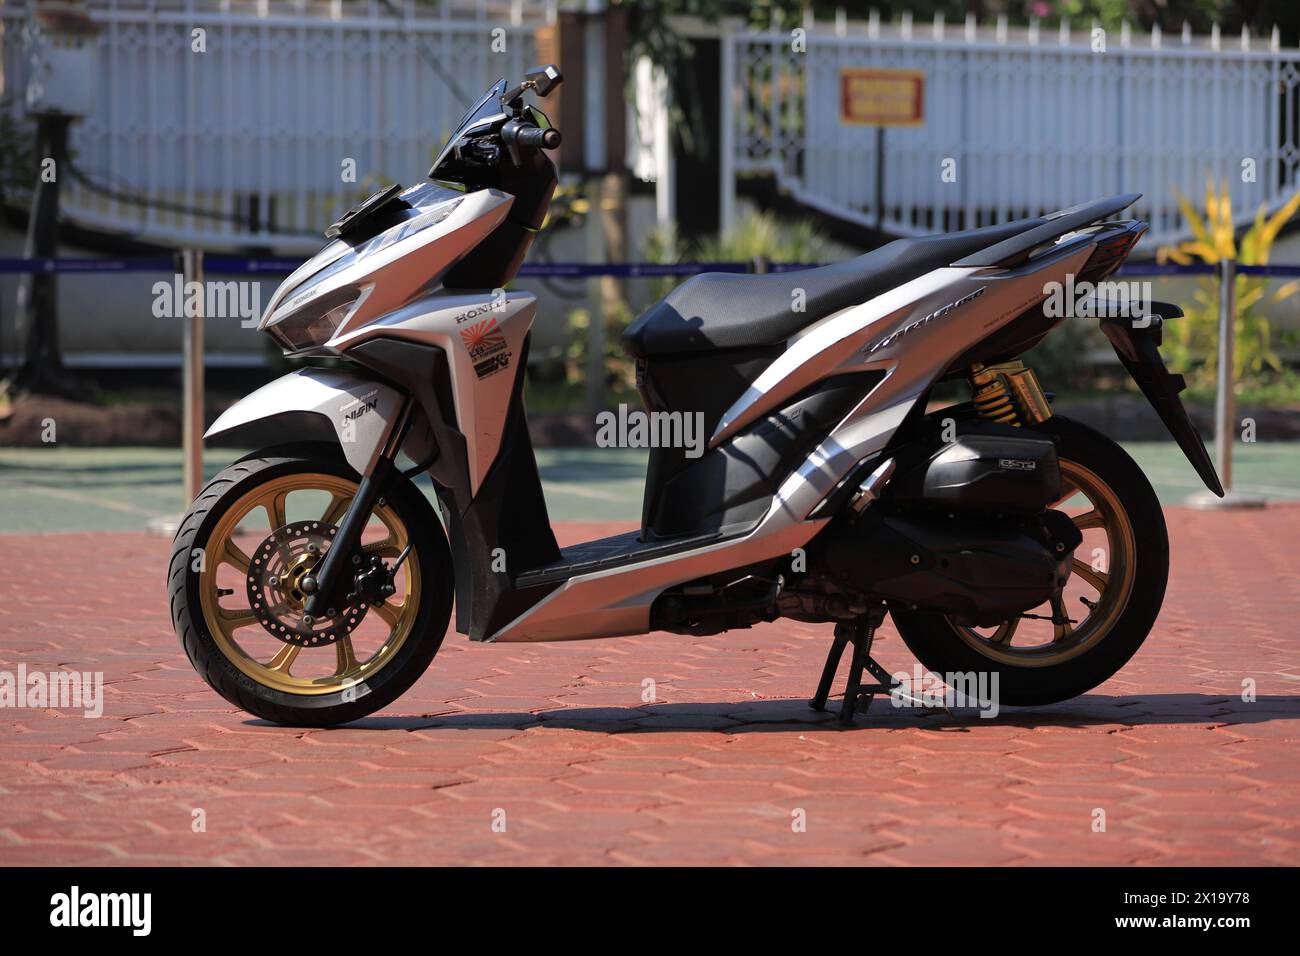 Moto de marque Honda Vario garée dans la cour Banque D'Images